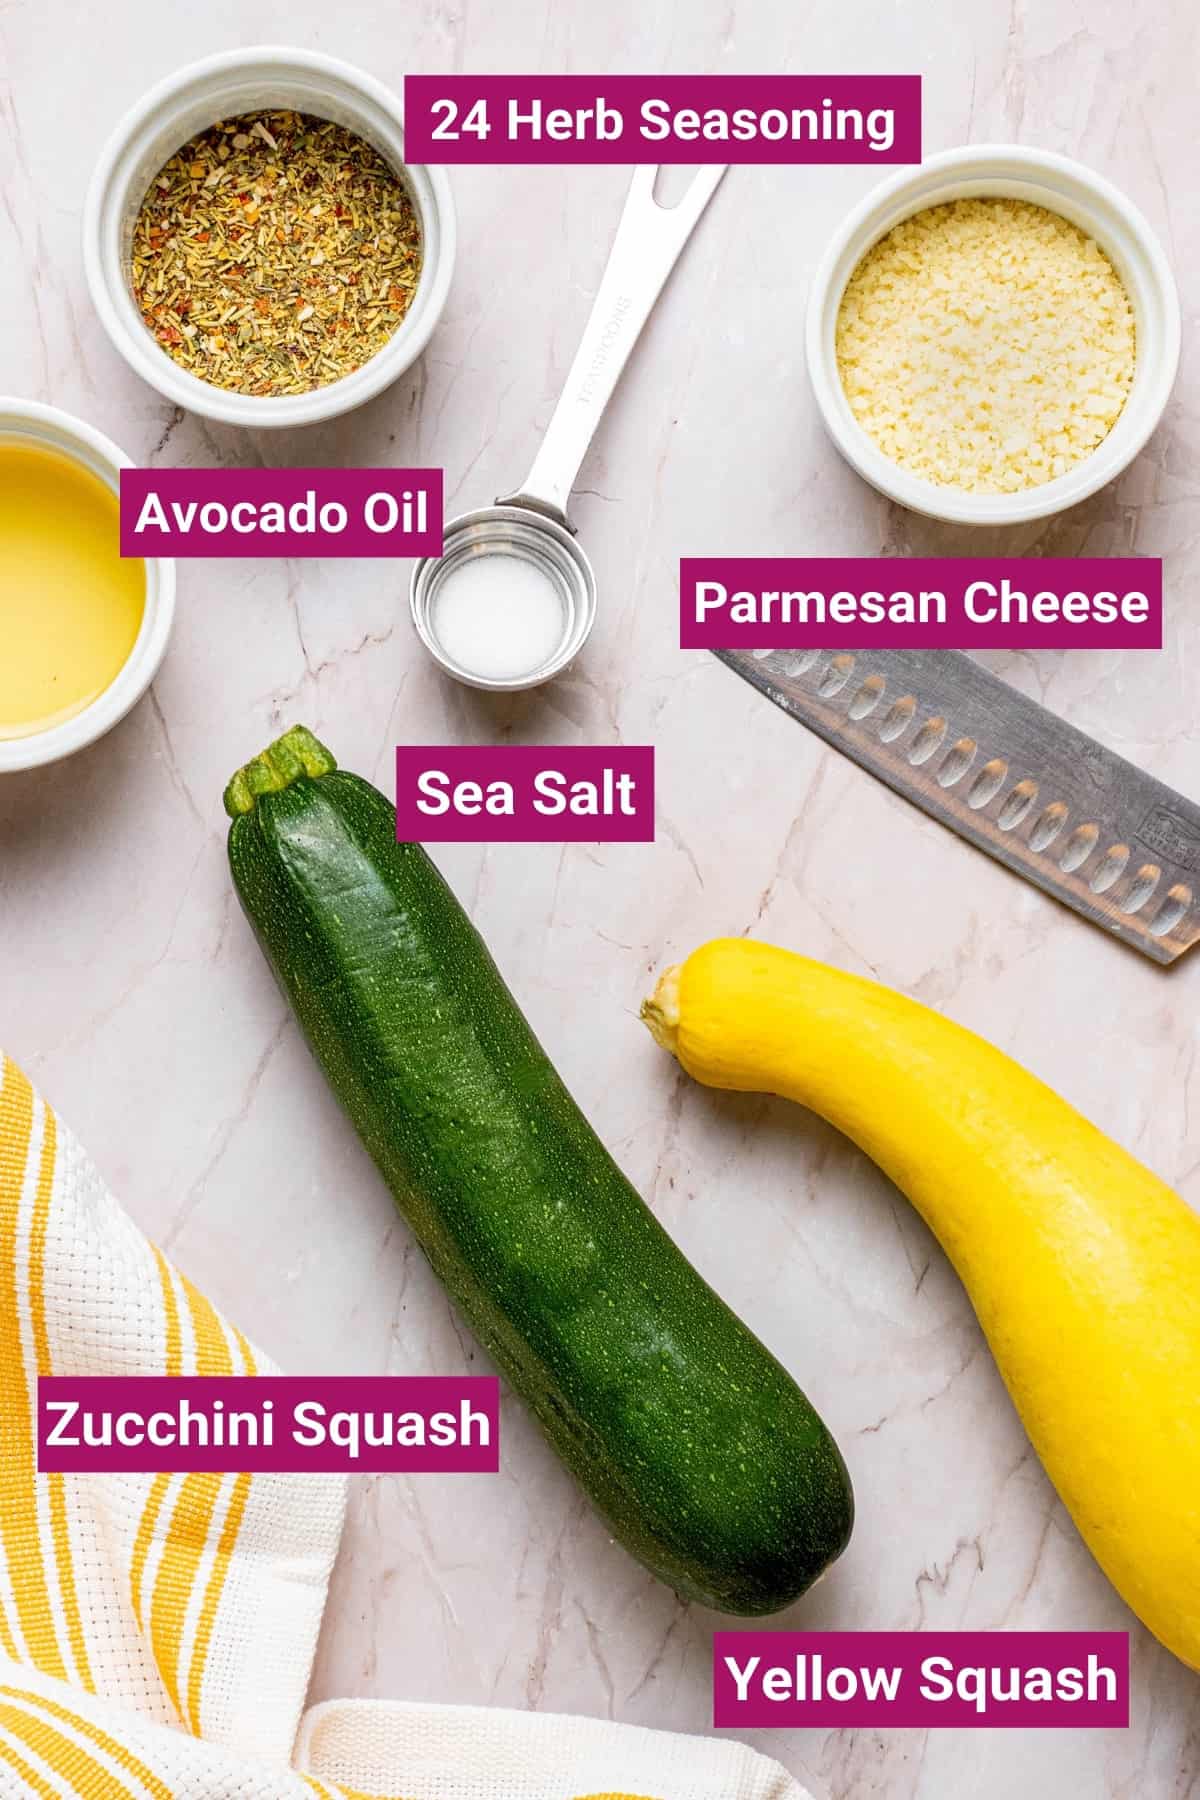 yellow squash, zucchini squash, Parmesan Cheese, sea salt, herb seasoning, and avocado oil in bowls